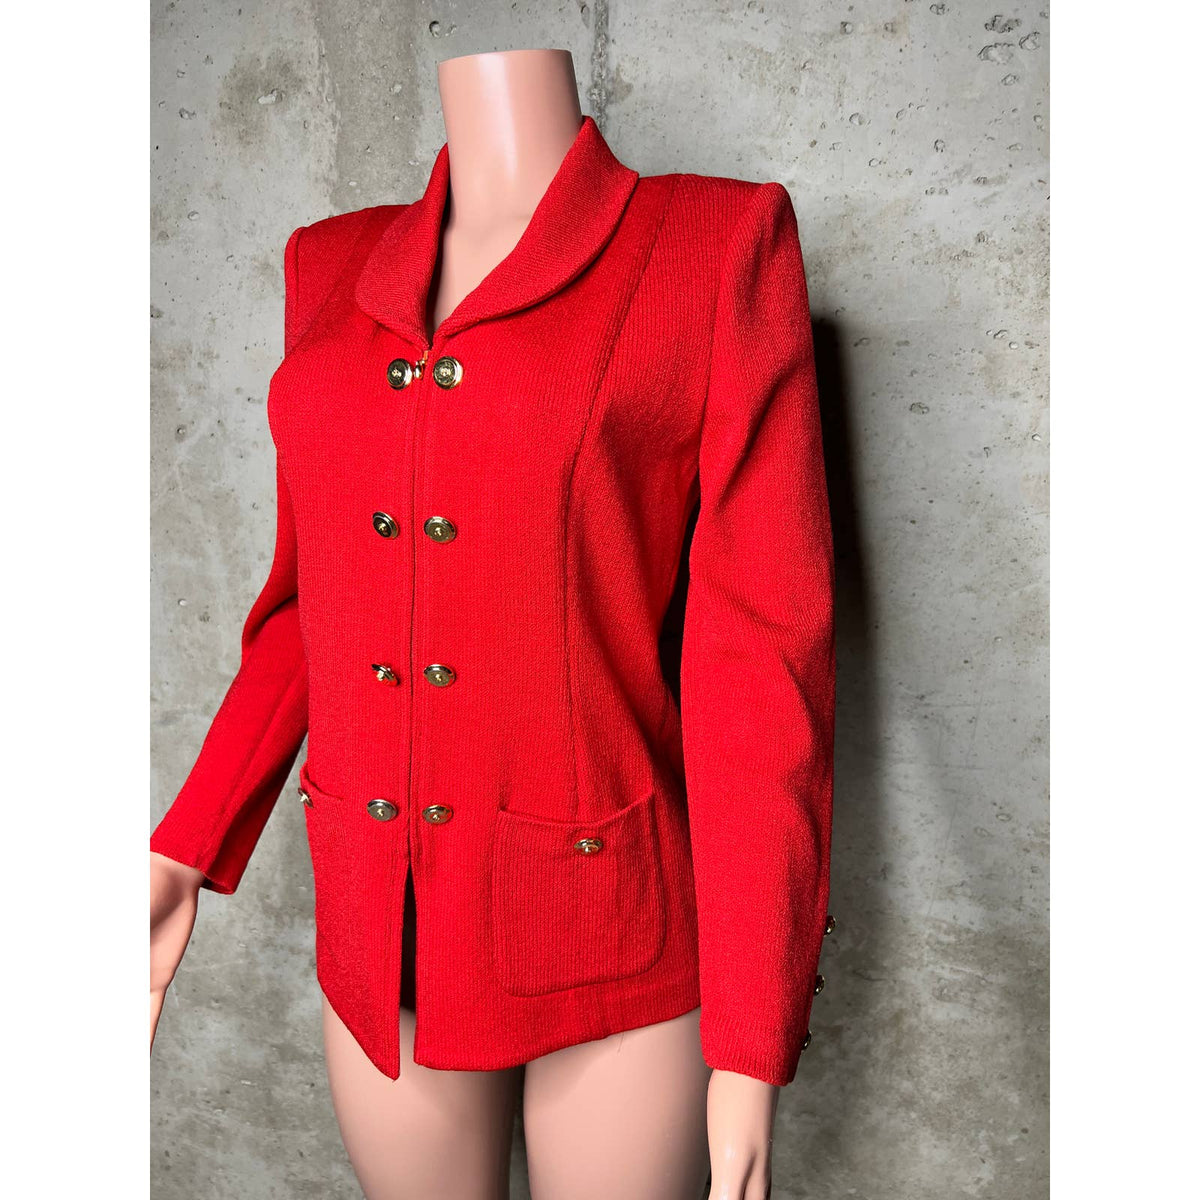 St John Red Knit Jacket w/ Gold Buttons Sz.4